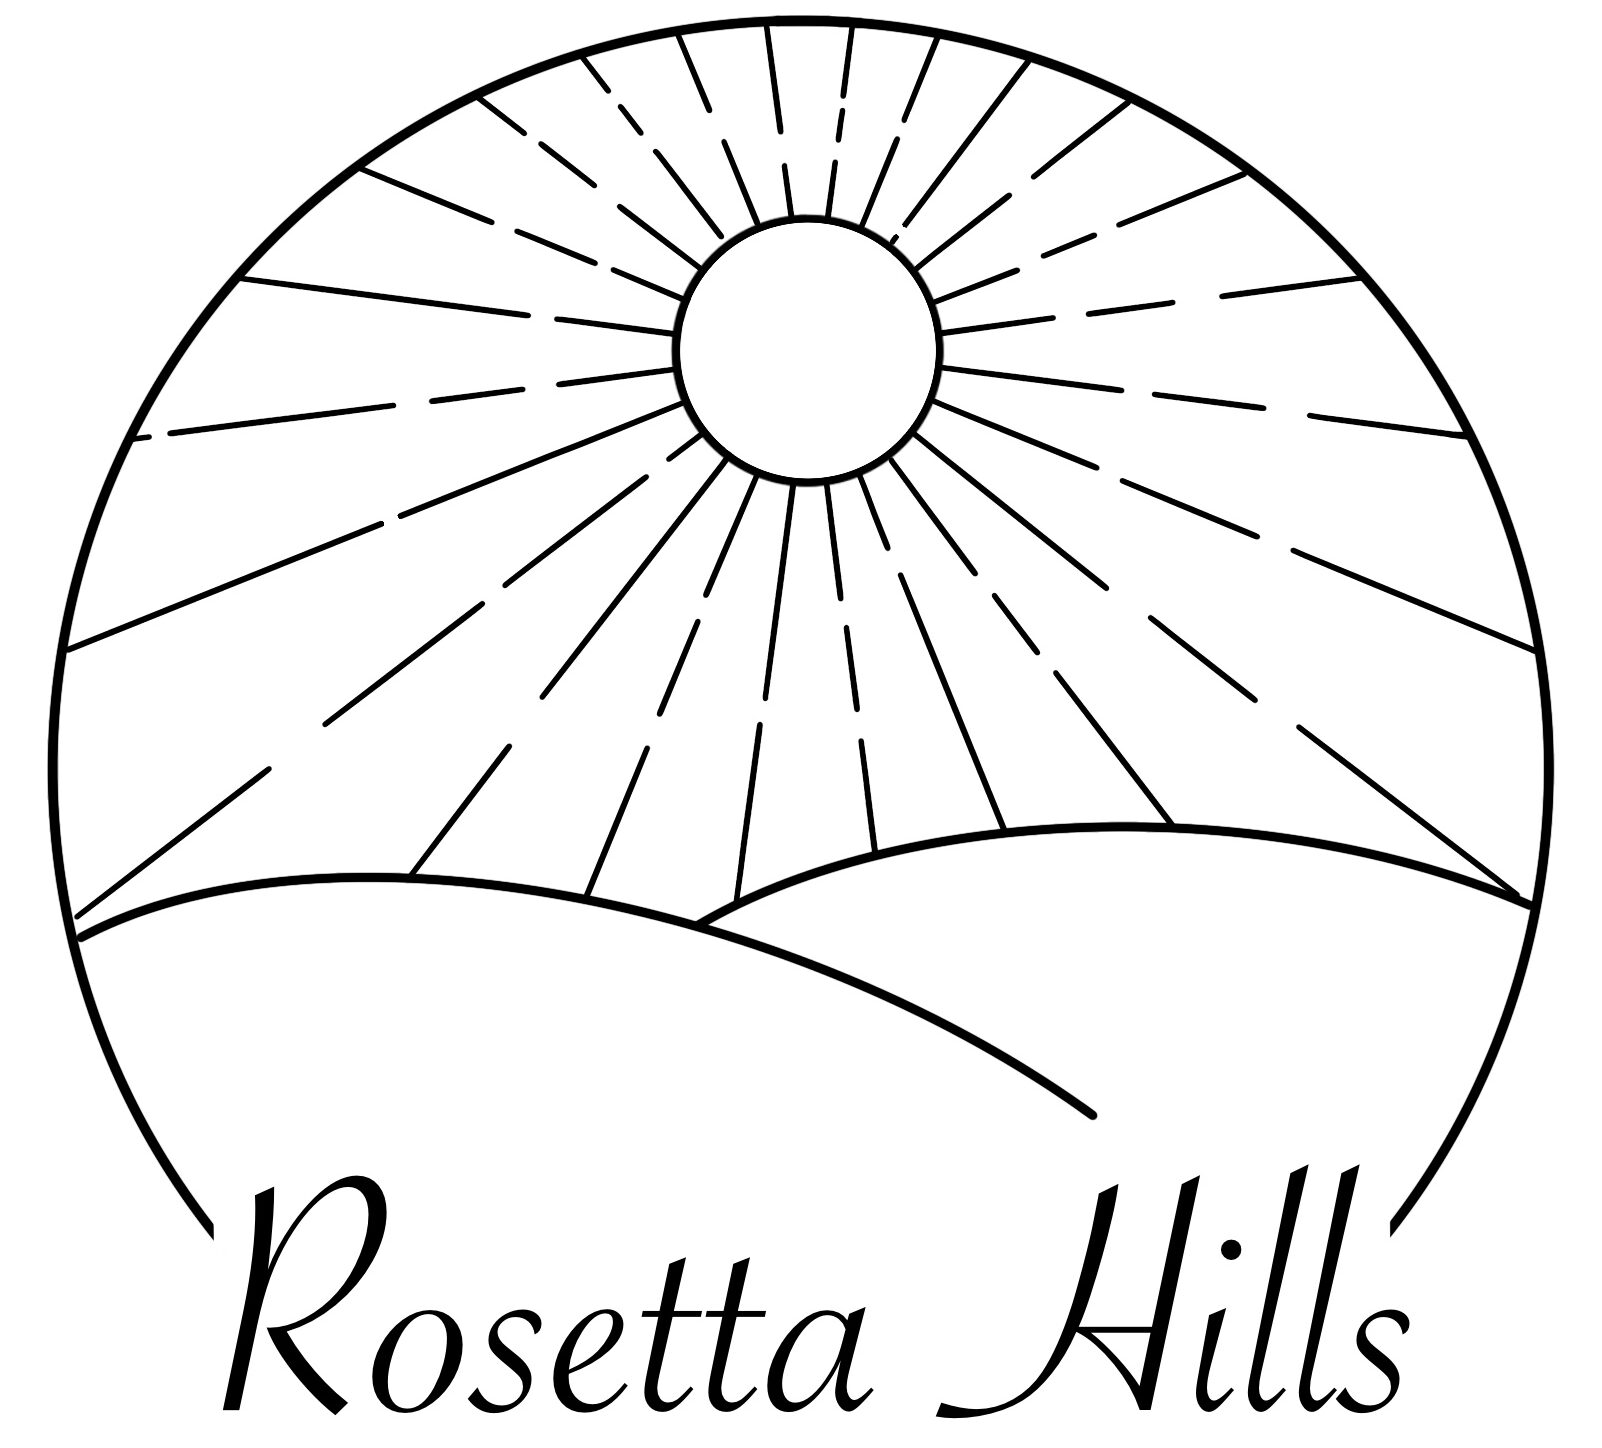 Rosetta Hills